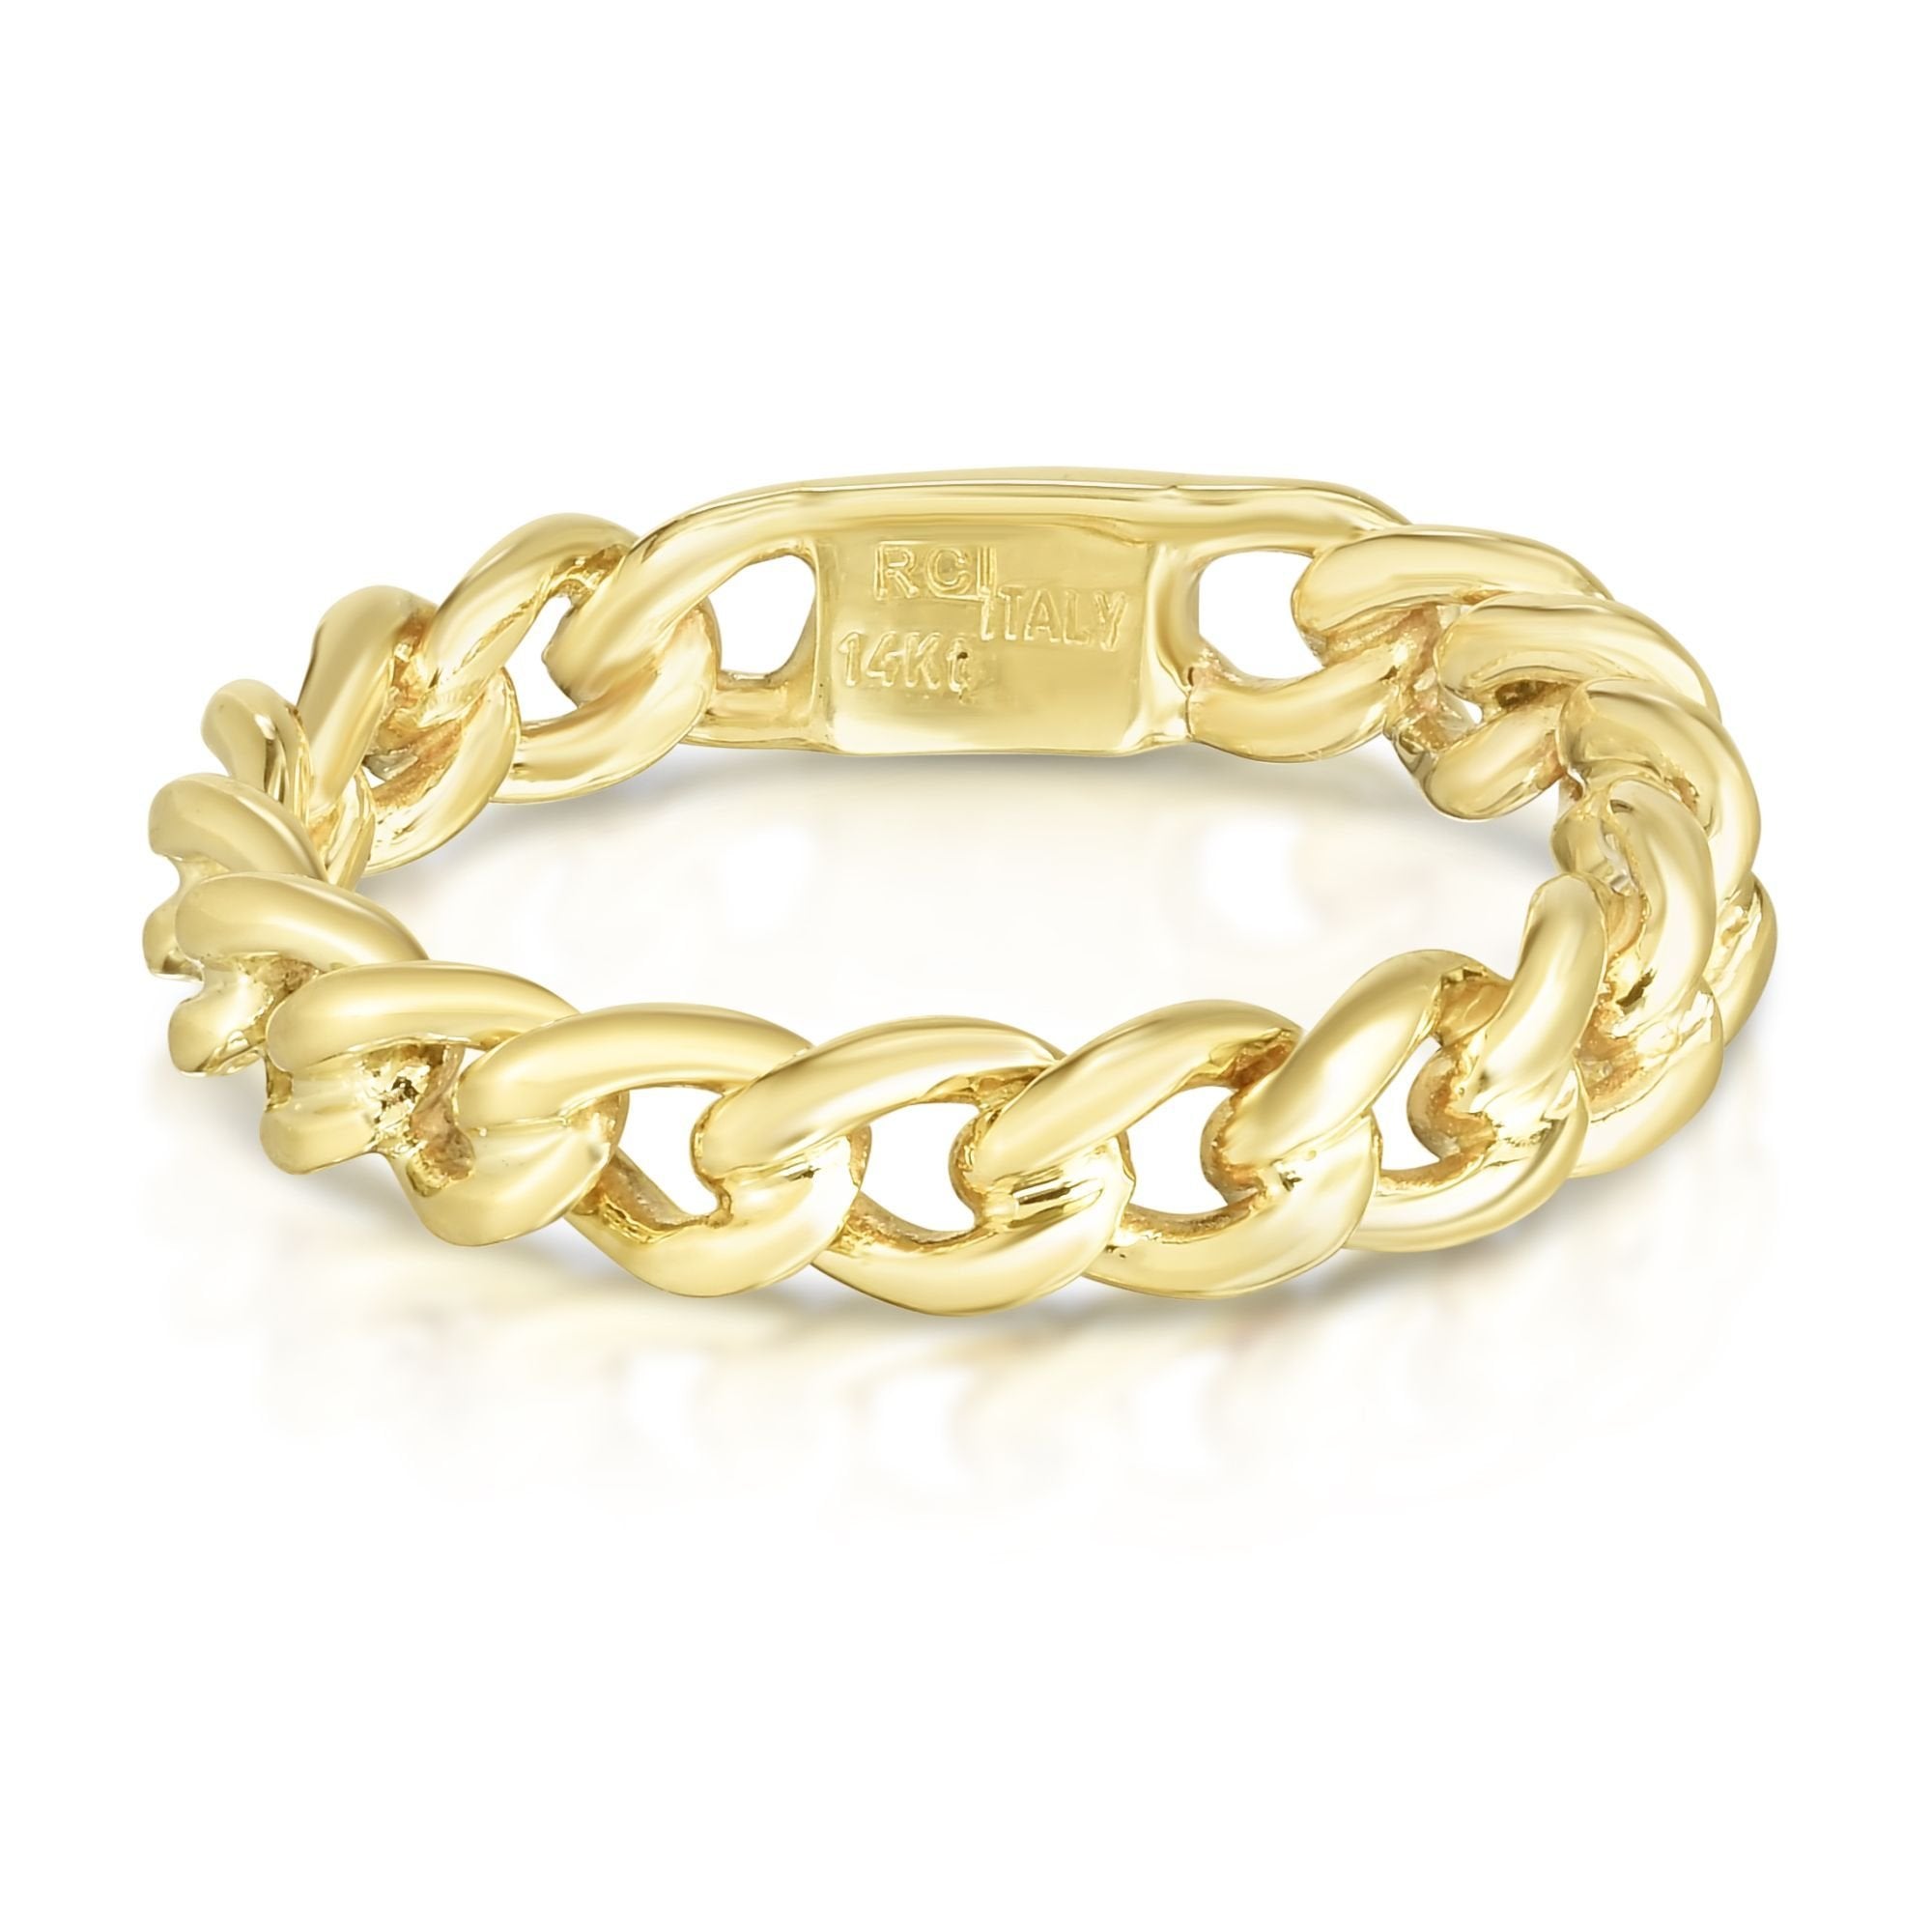 14K Yellow Gold High Polish Cuban, Curb Link Ring